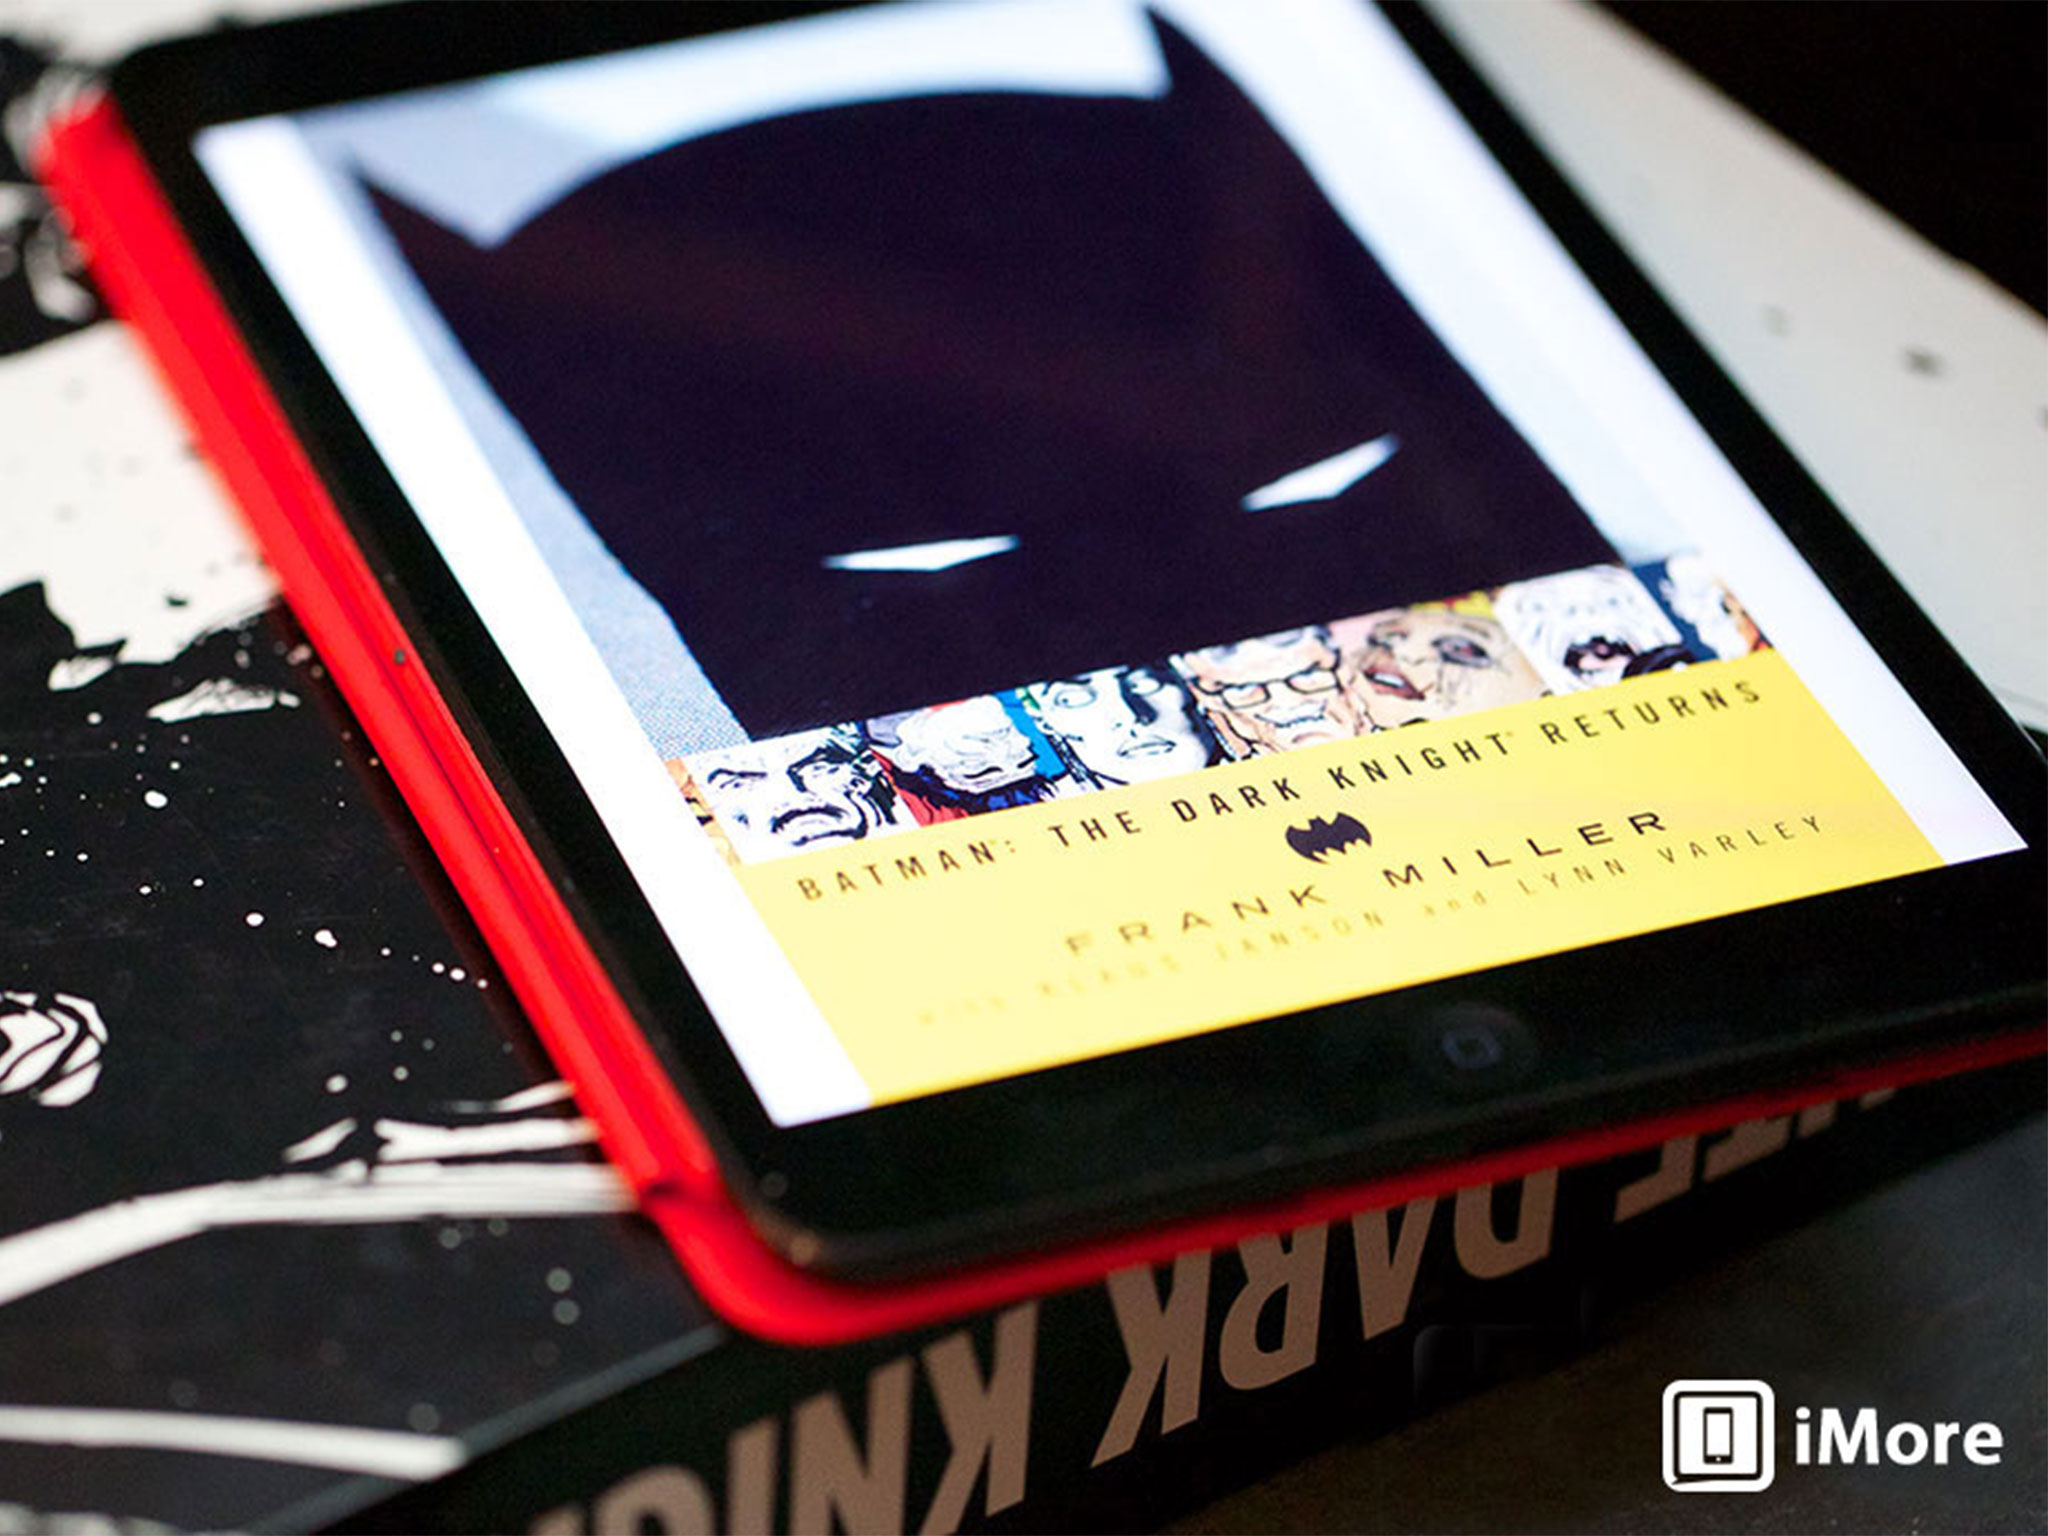 iPad mini 2: How good is it for comic book reading?